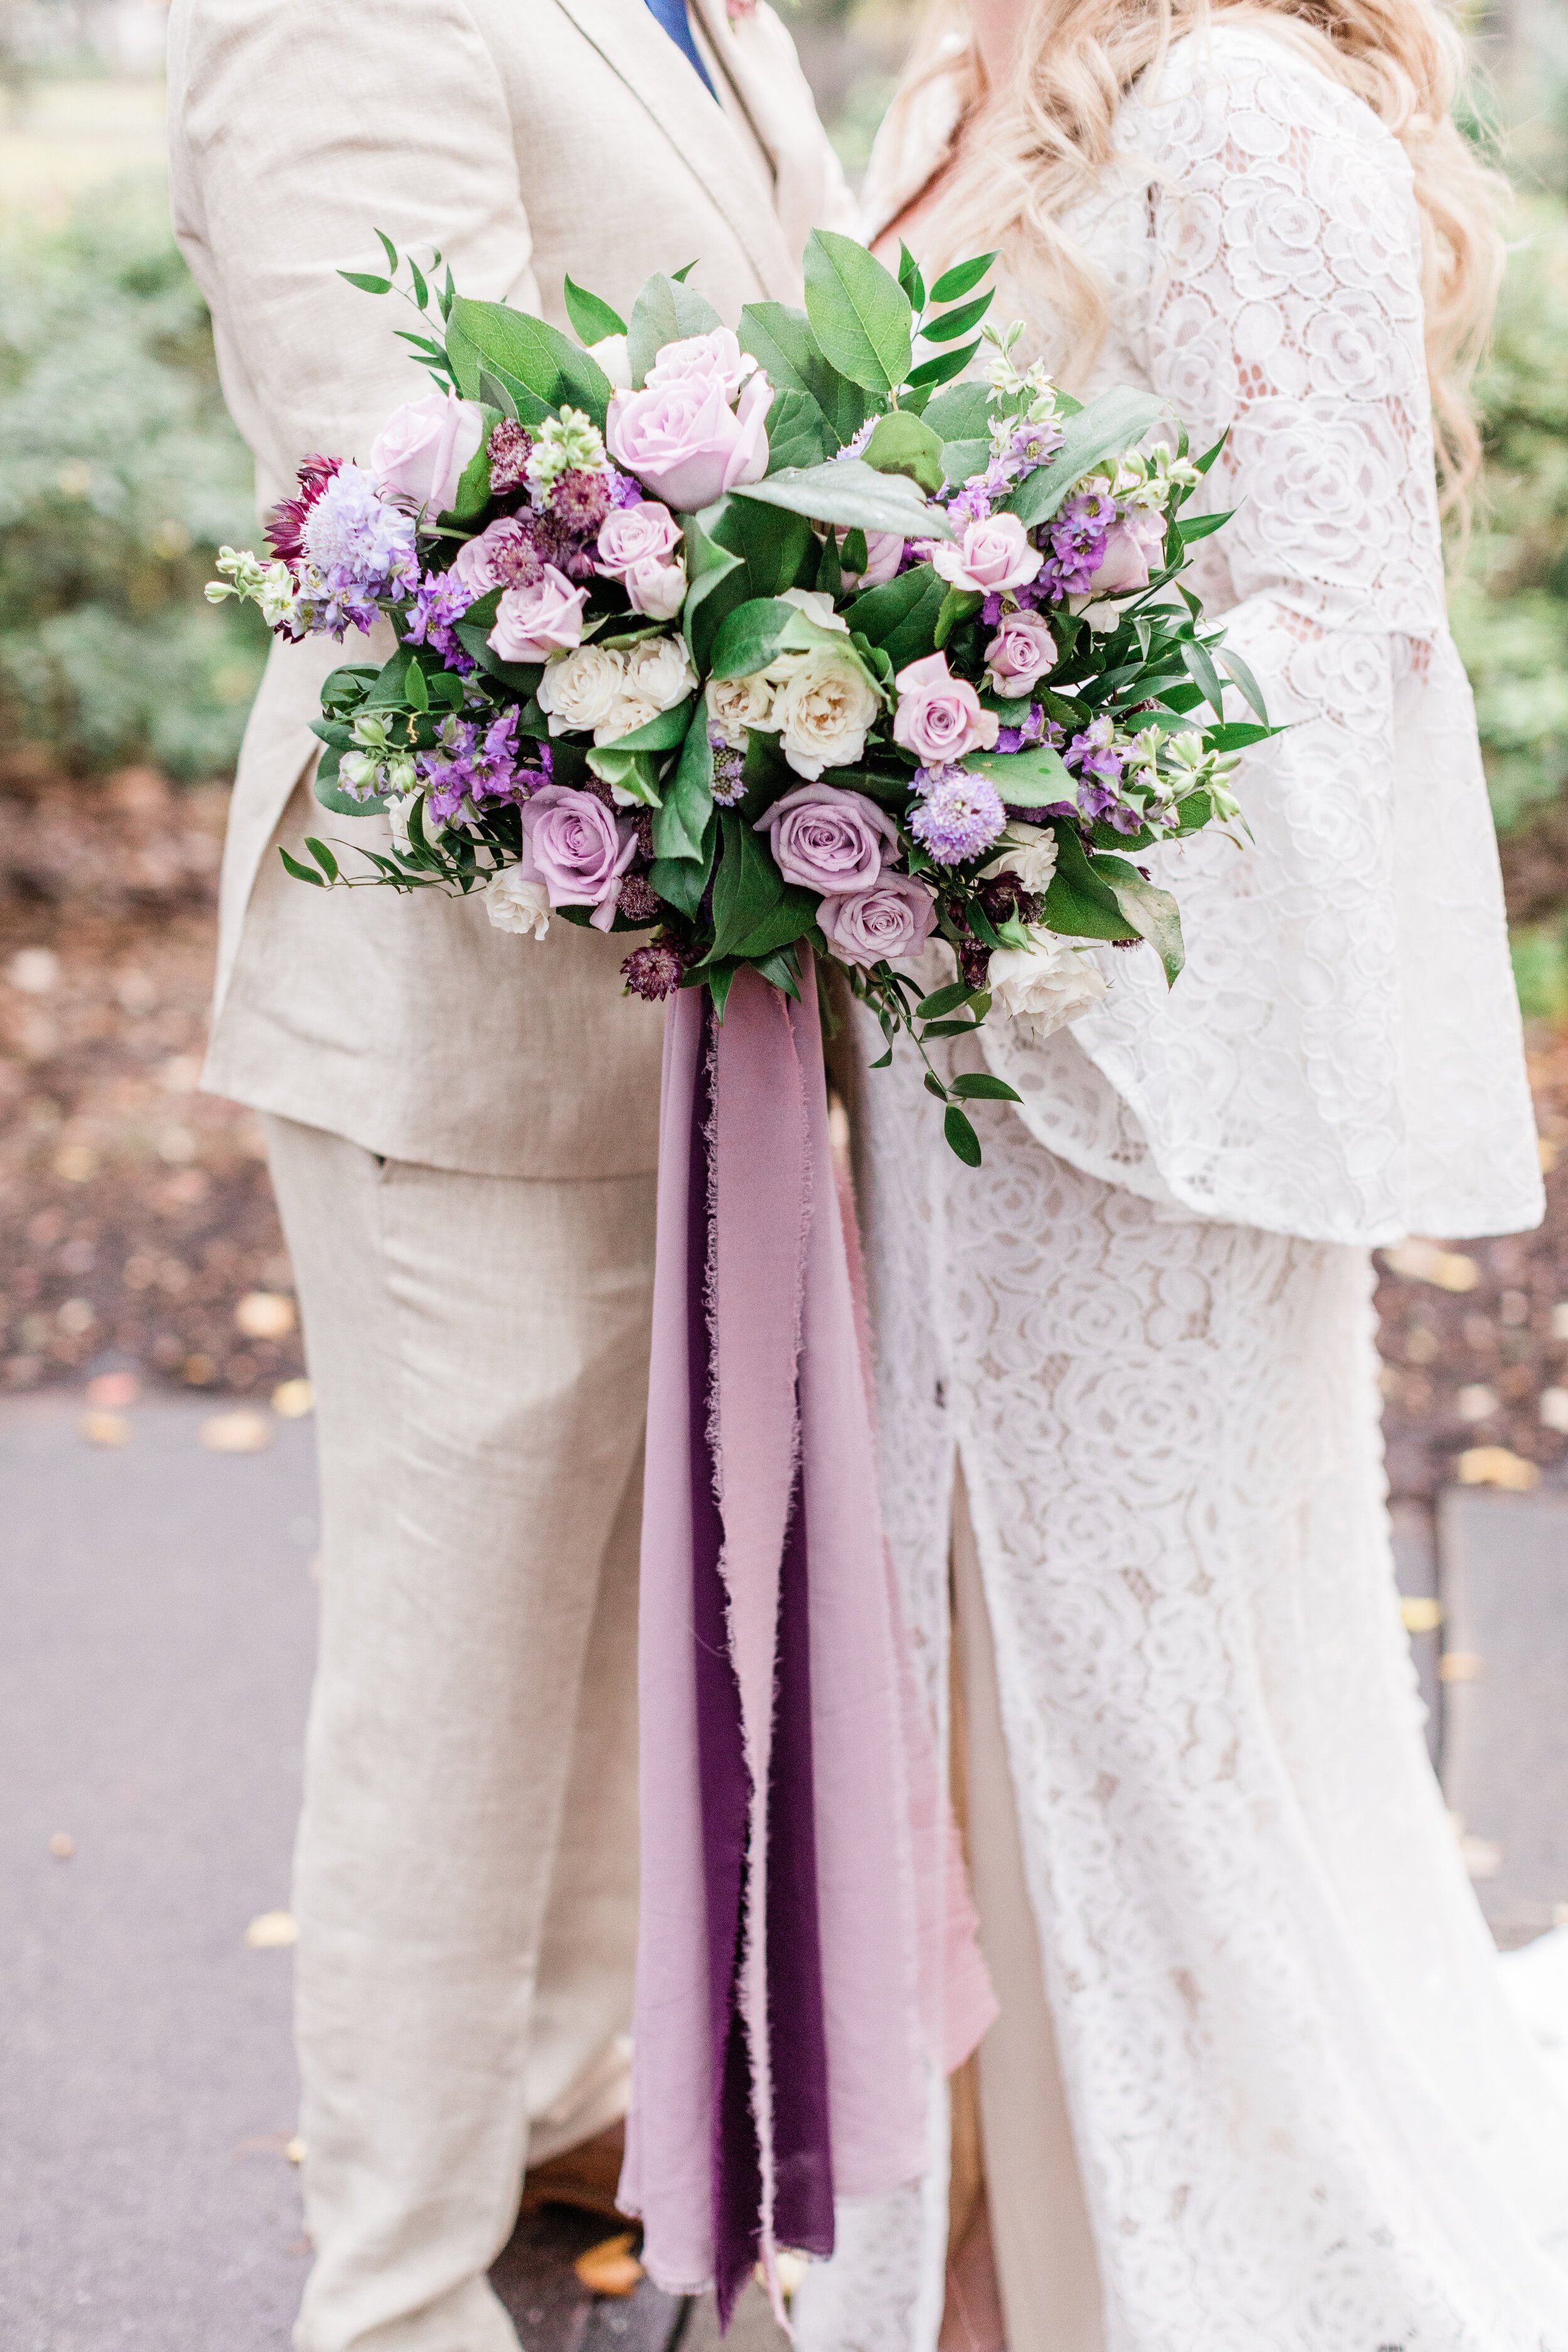 ivory-and-beau-florals-elopement-flowers-wedding-flowers-floral-design-savannah-elopement-package-savannah-florist-purple-and-white-flowers-blog-wedding-blog-inspiration-AptBPhoto_KatiCorey-14.jpg